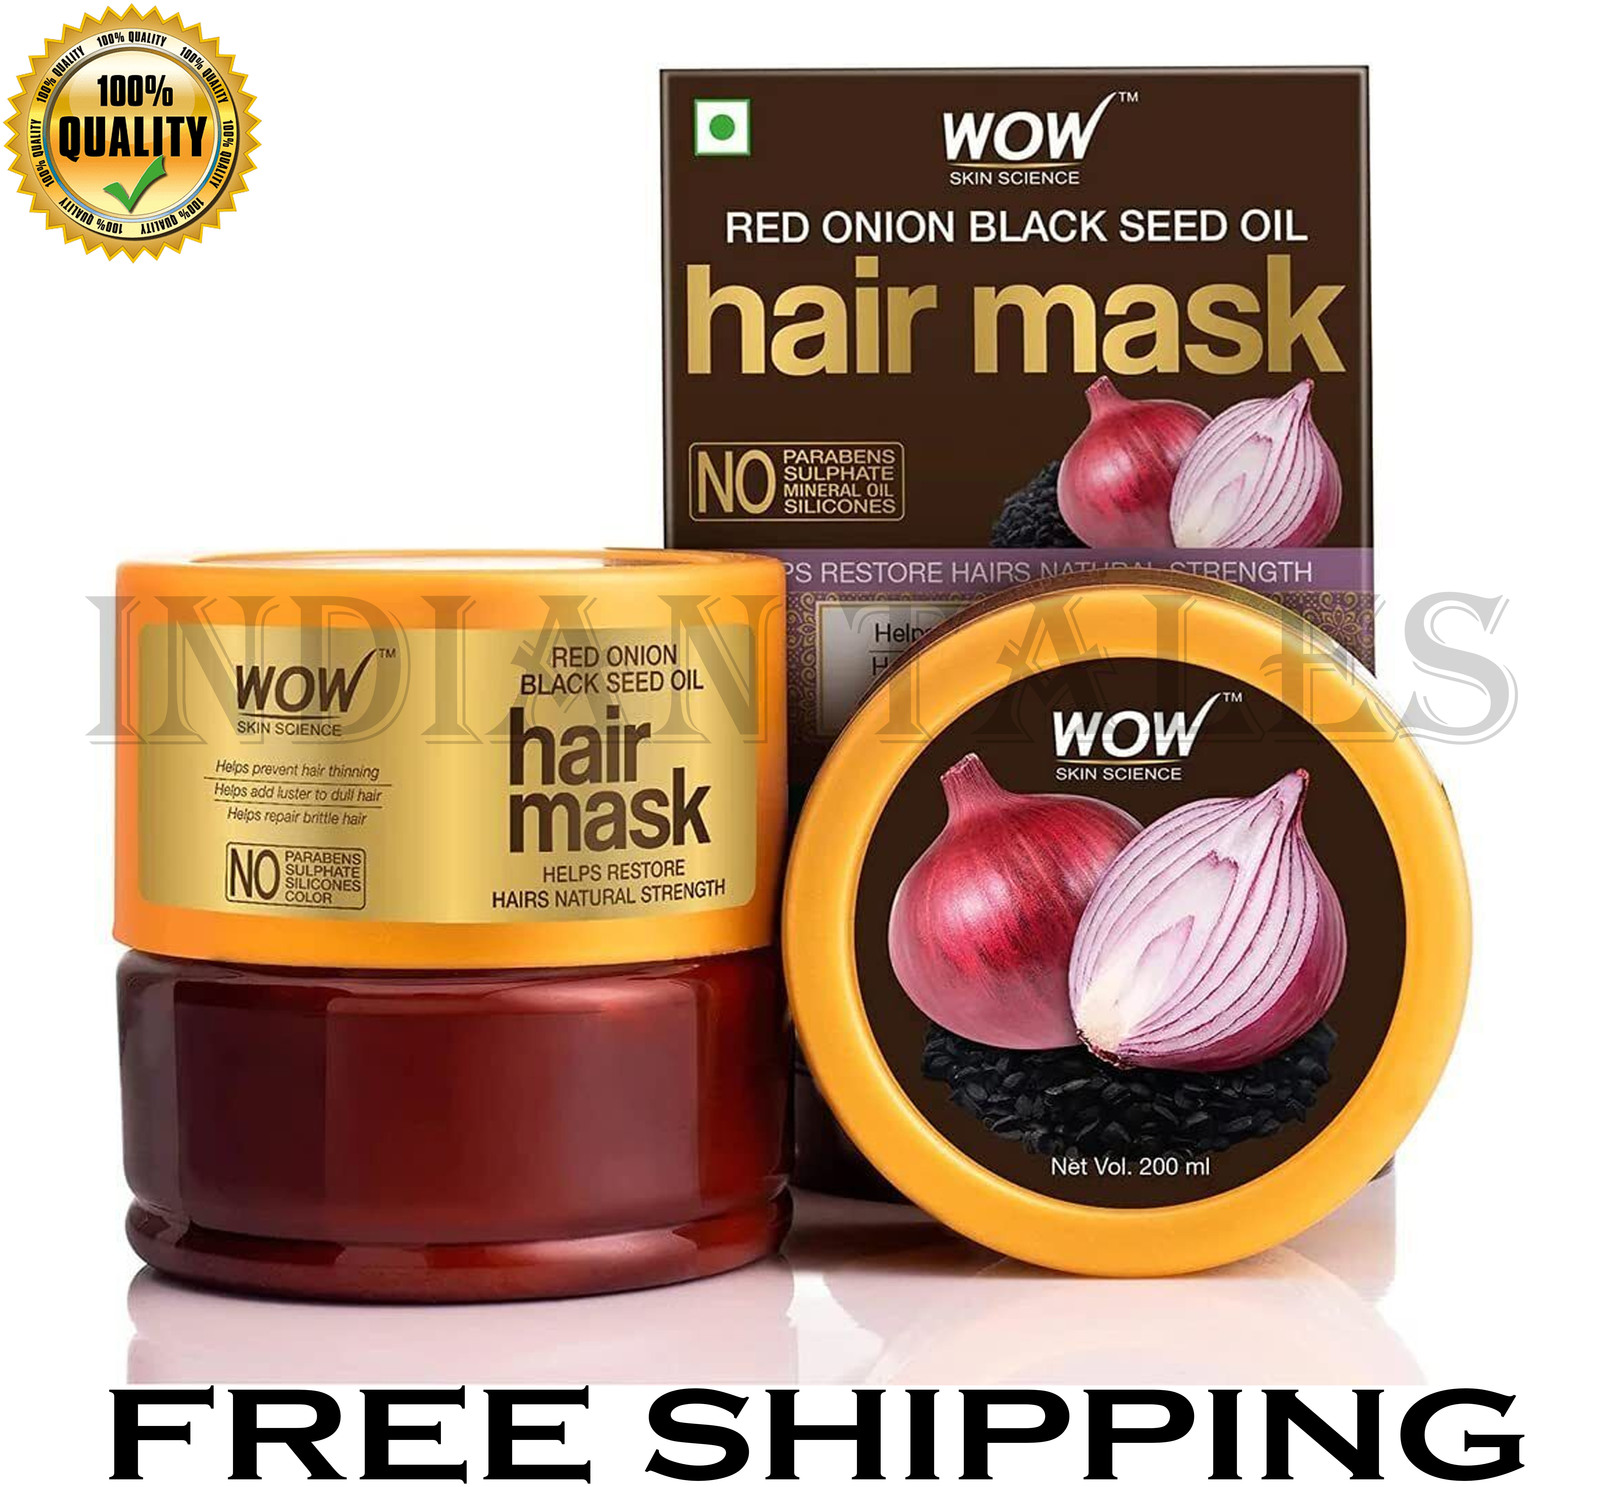  WOW Skin Science onion hair mask for Dandruff/Hair Growth/- 200ml - $27.99